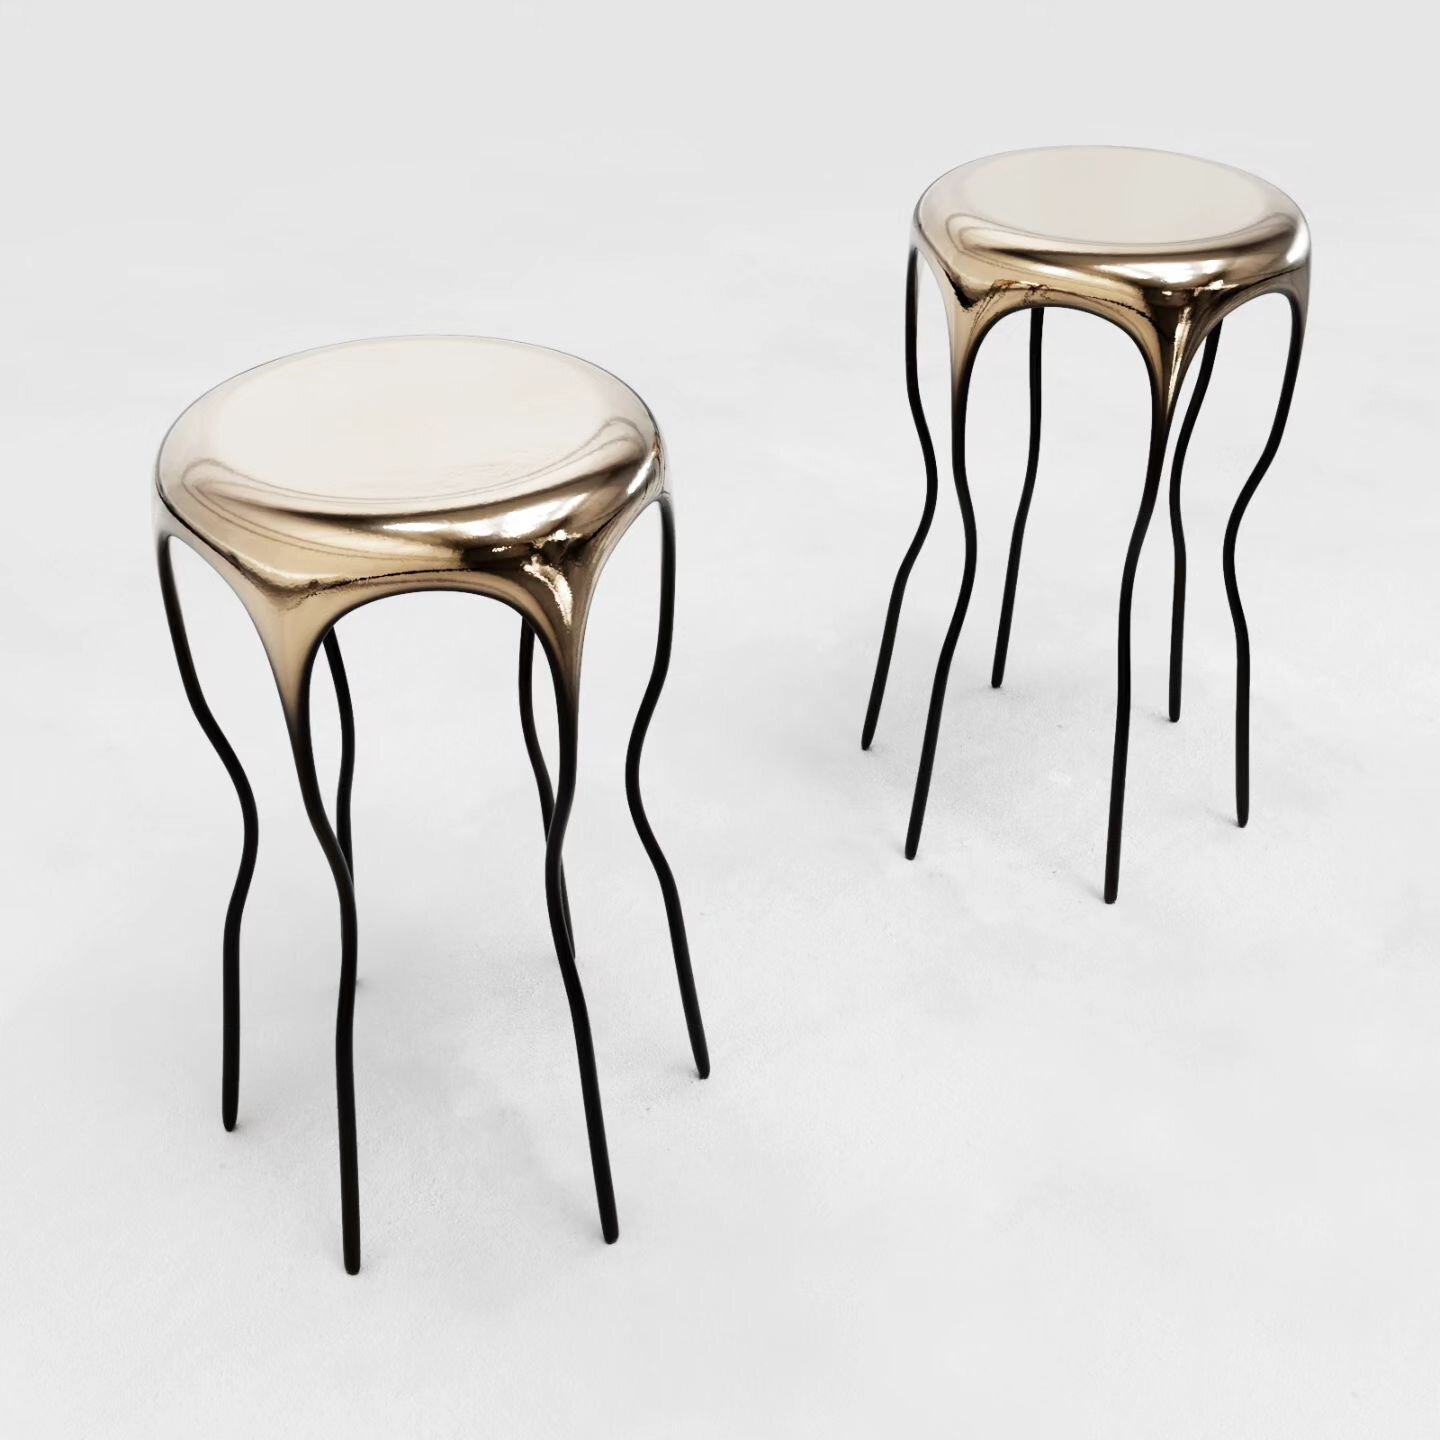 Chironex Side Tables
.
.
.
.
.
.
.
.
.
.
.
#metalfabrication #polished #sculpture #patina #artist #design #furnituredesign #limitededition #luxury #interiordesign #organic #bronze #sculptureart #contemporaryart #designer #decor #collector #dubai #par